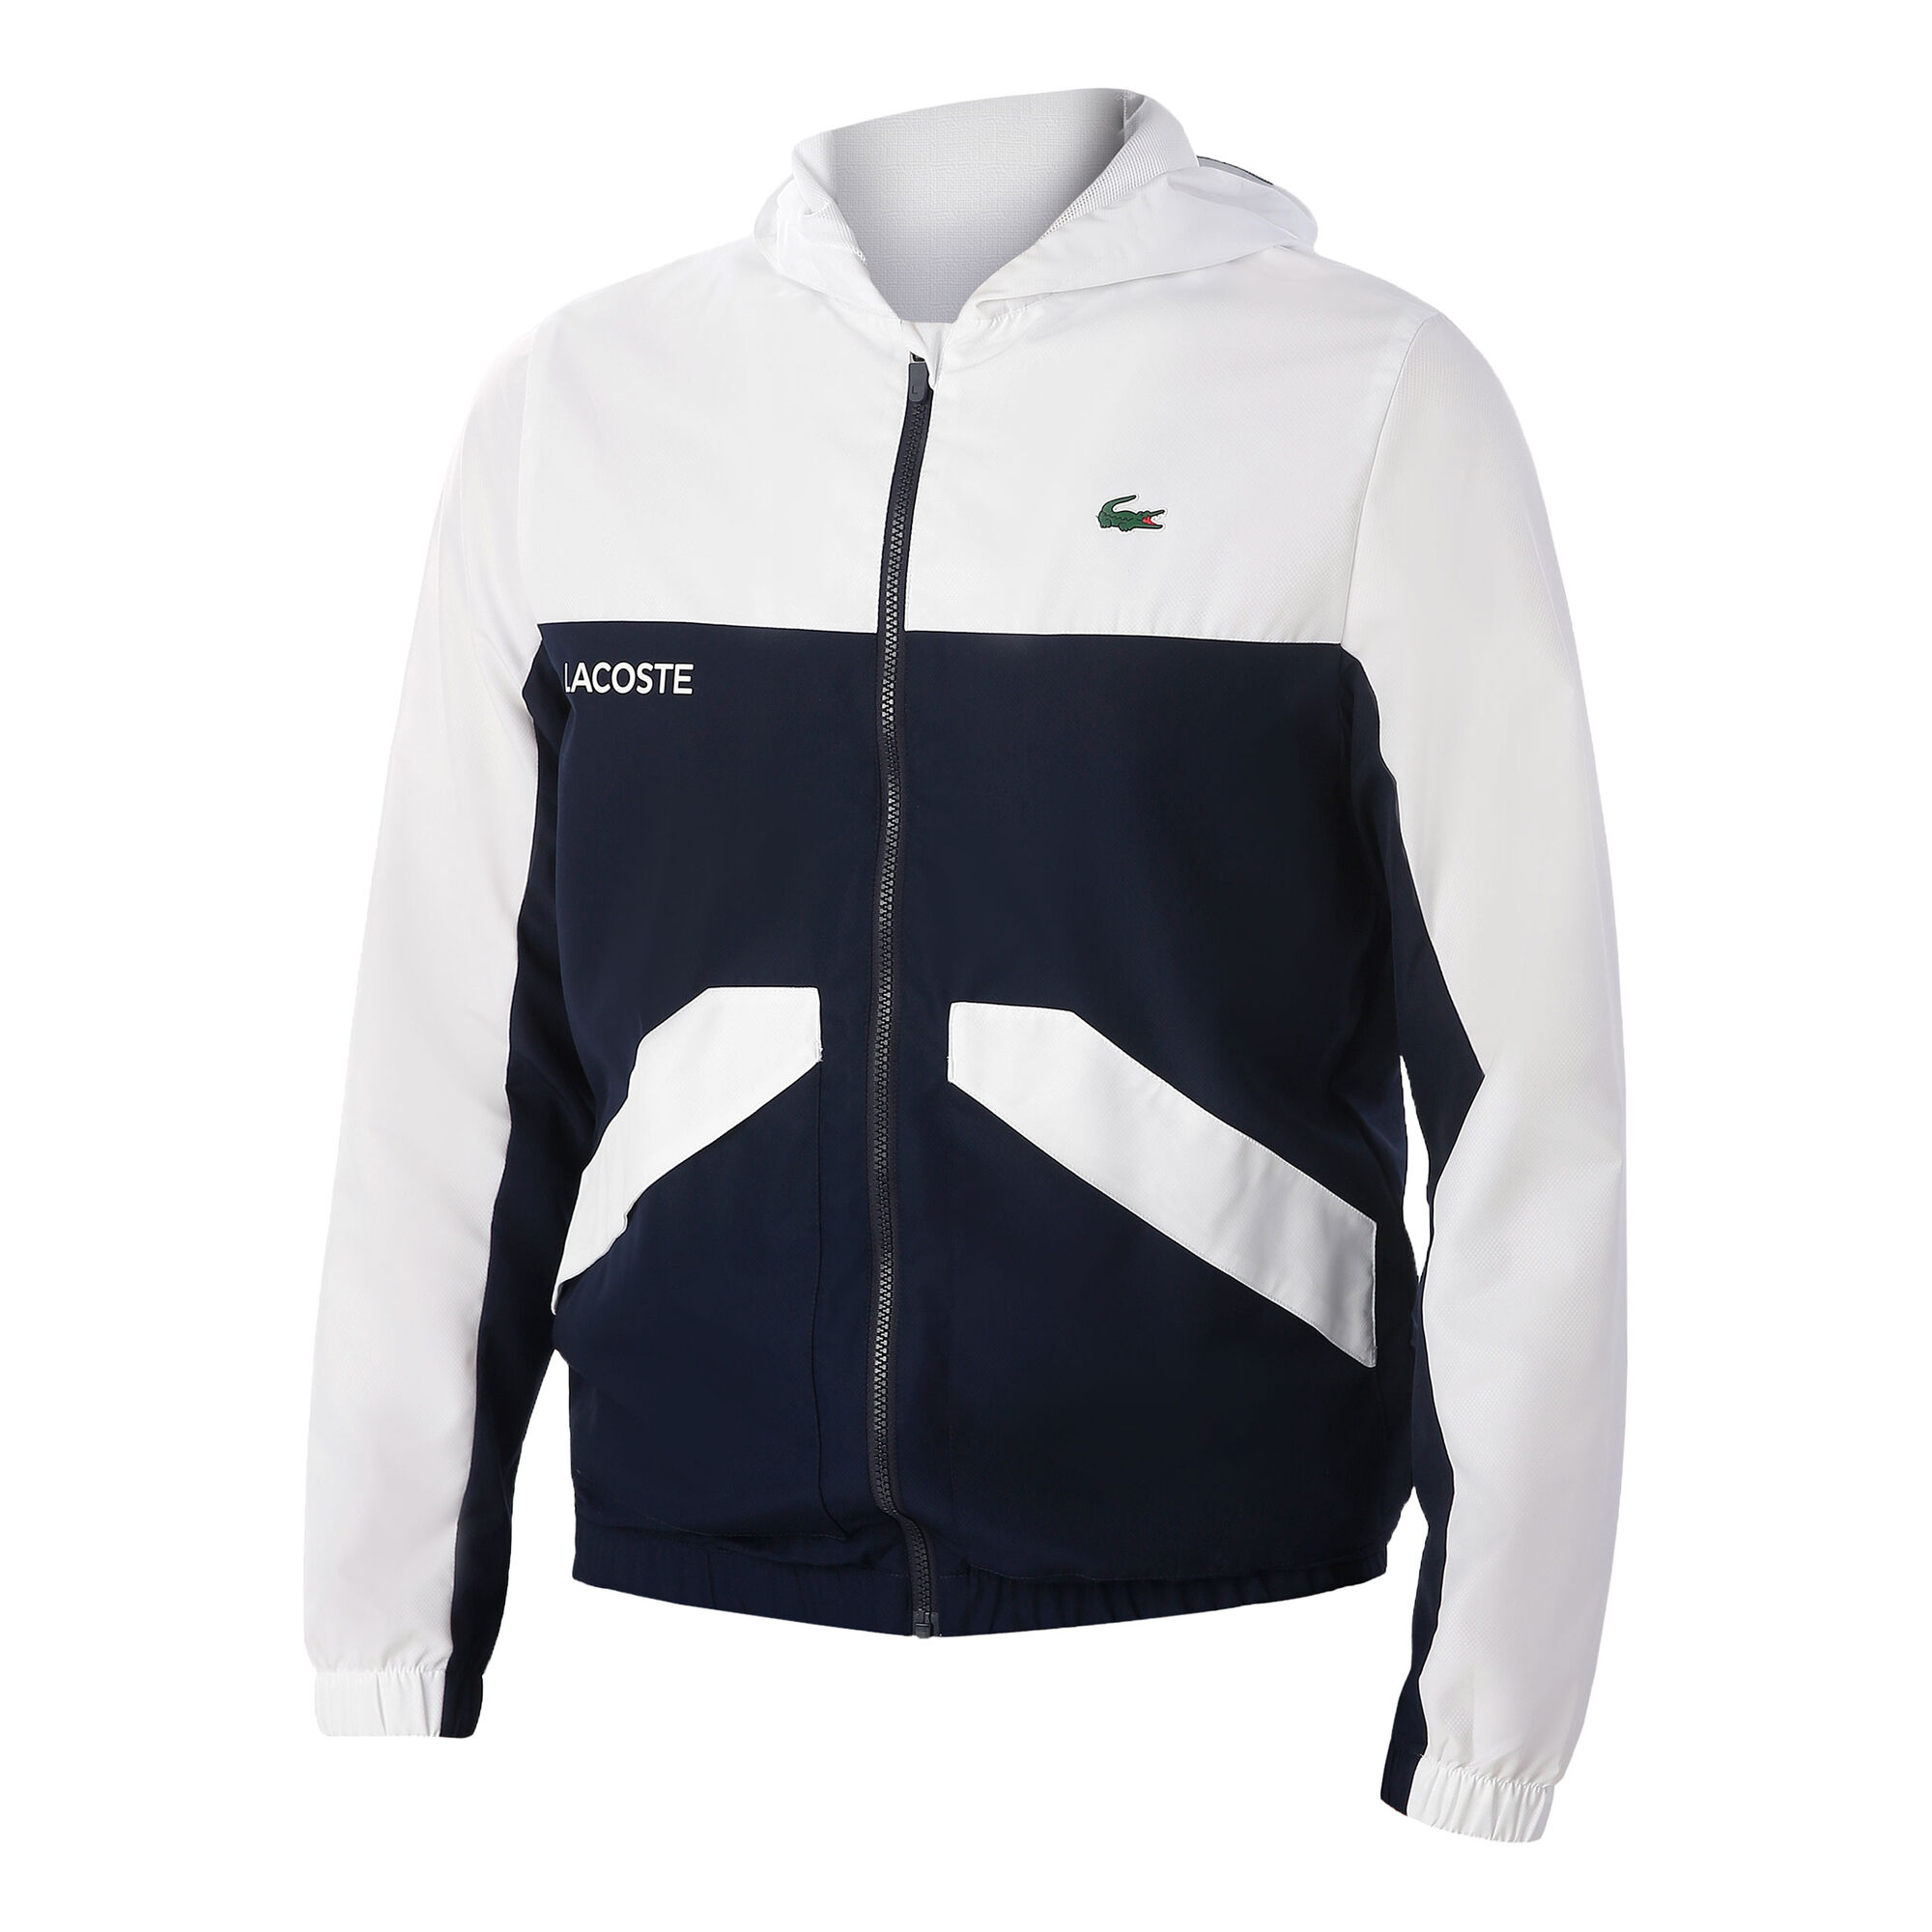 online | Tennis-Point buy Lacoste Training Jacket Men - Dark Blue, White